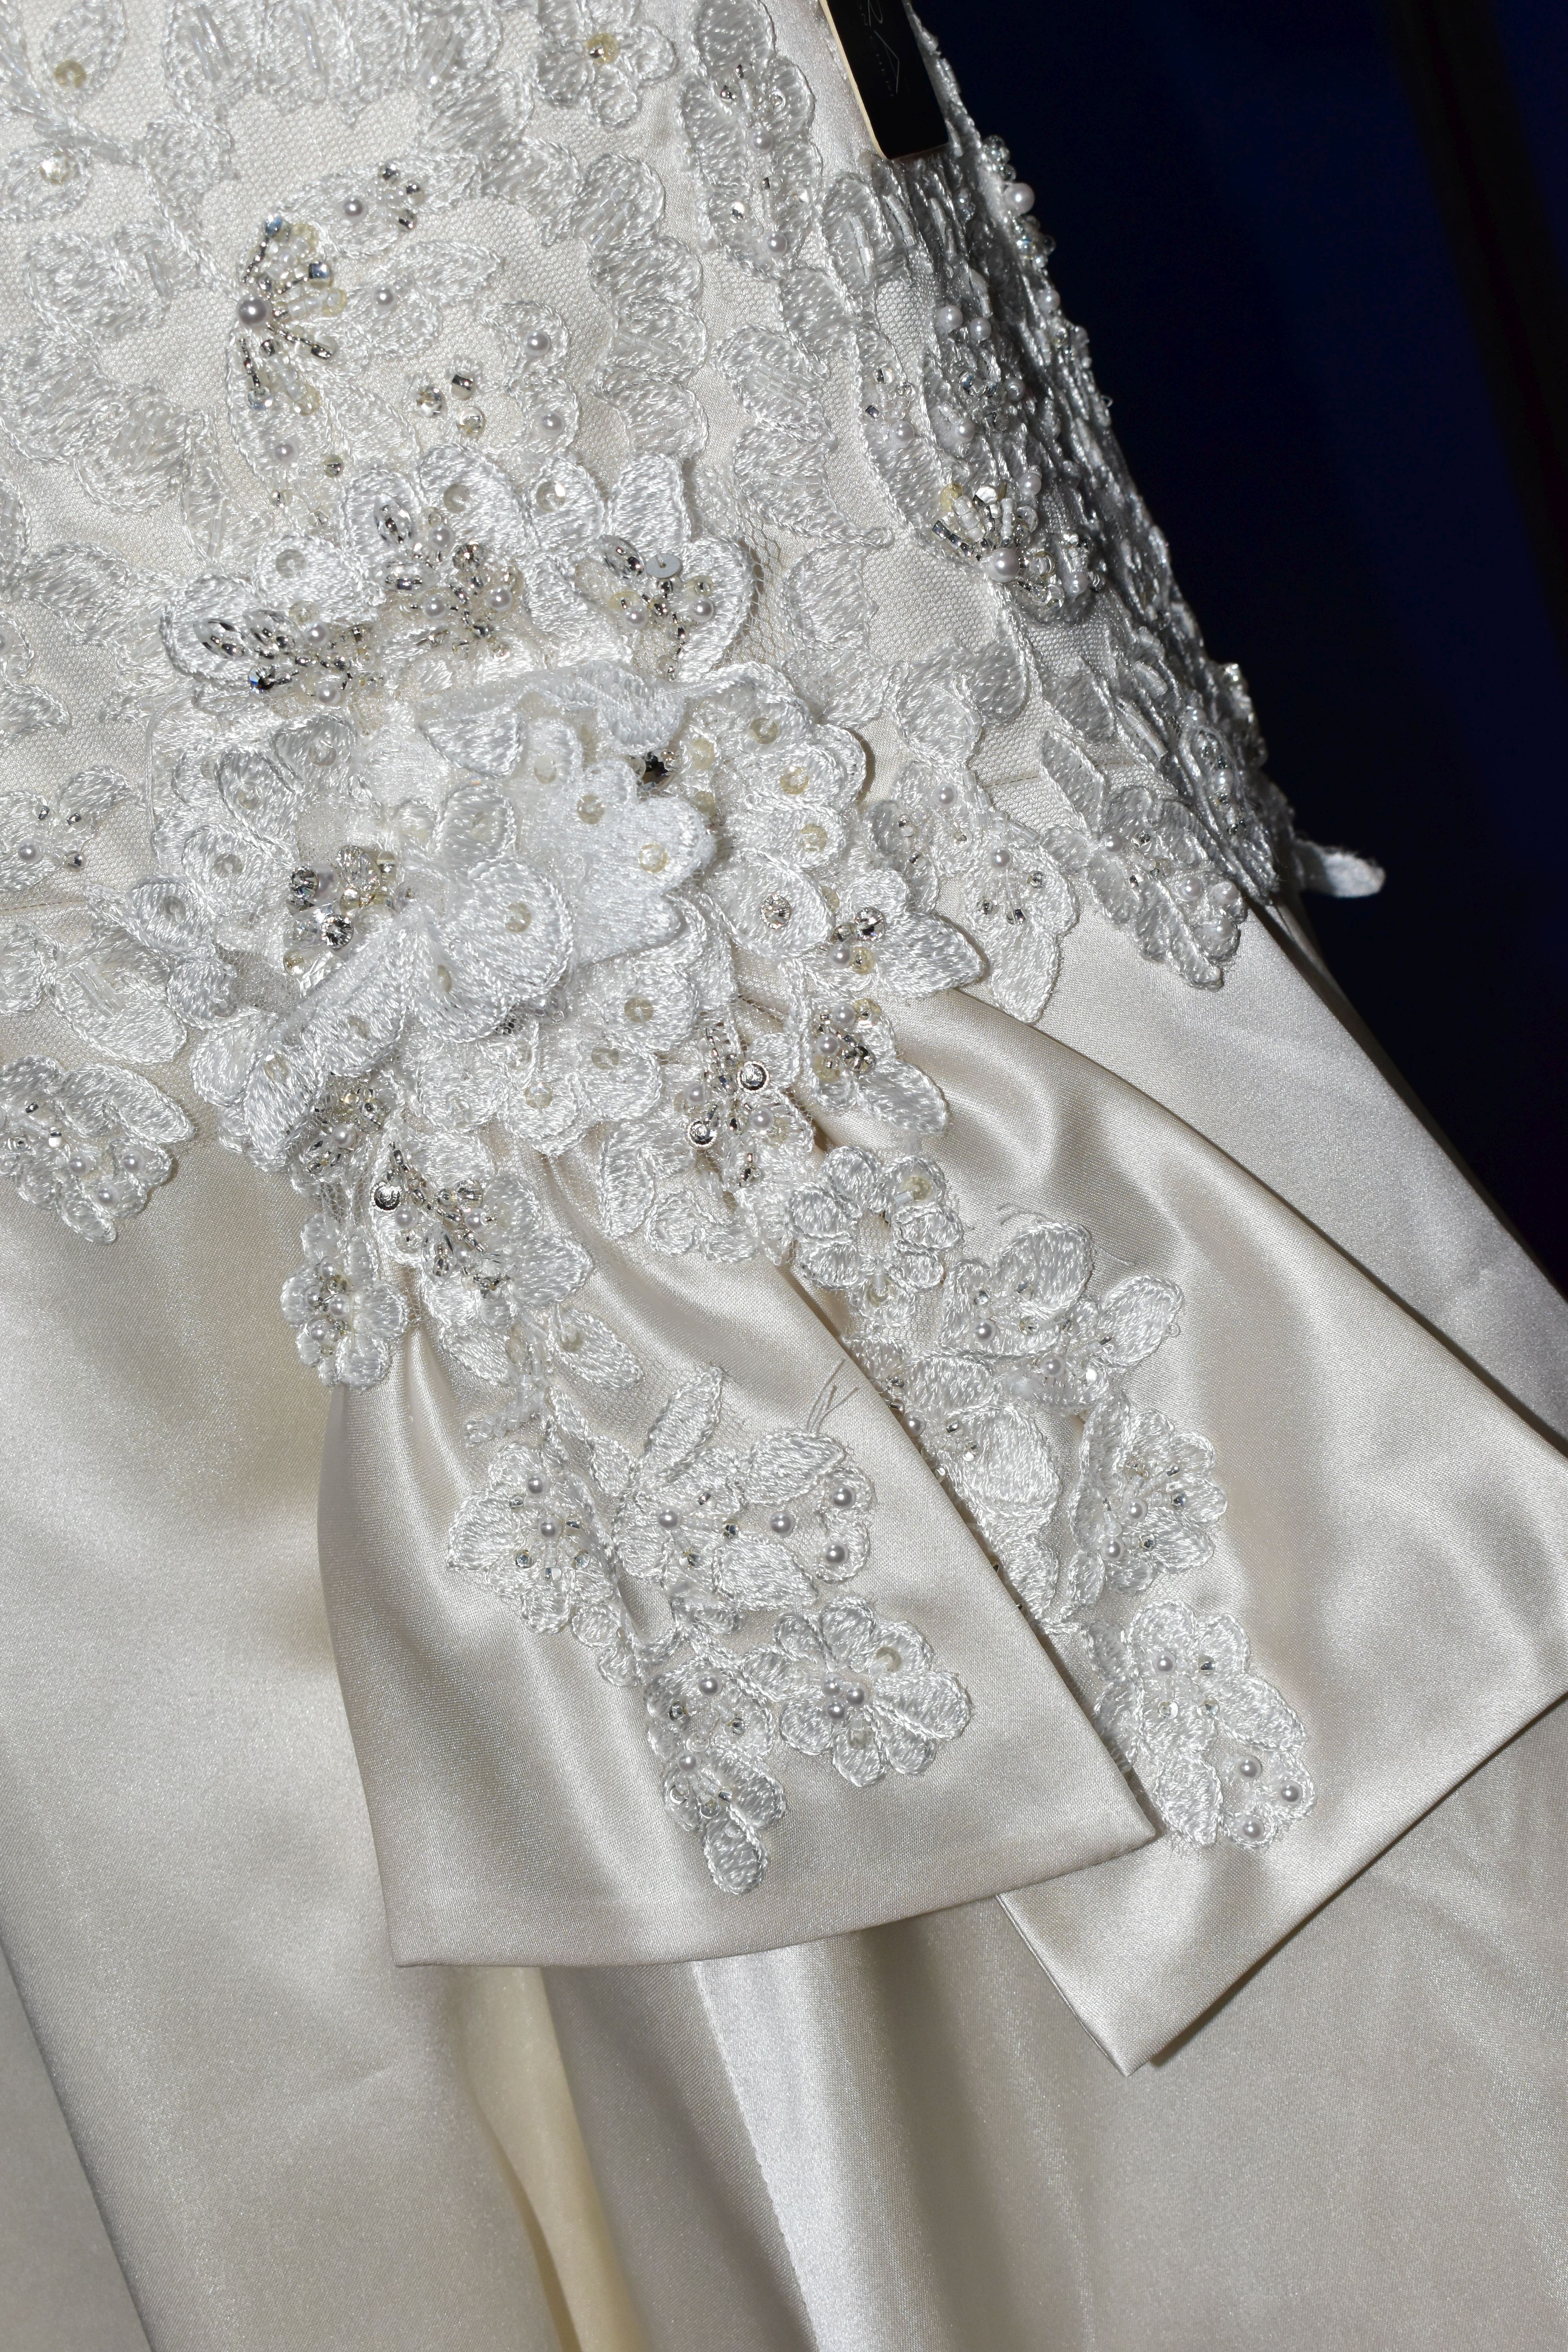 WEDDING DRESS, 'David Tutera' champagne, size 6, satin, strapless, beaded appliques (1) - Image 4 of 10